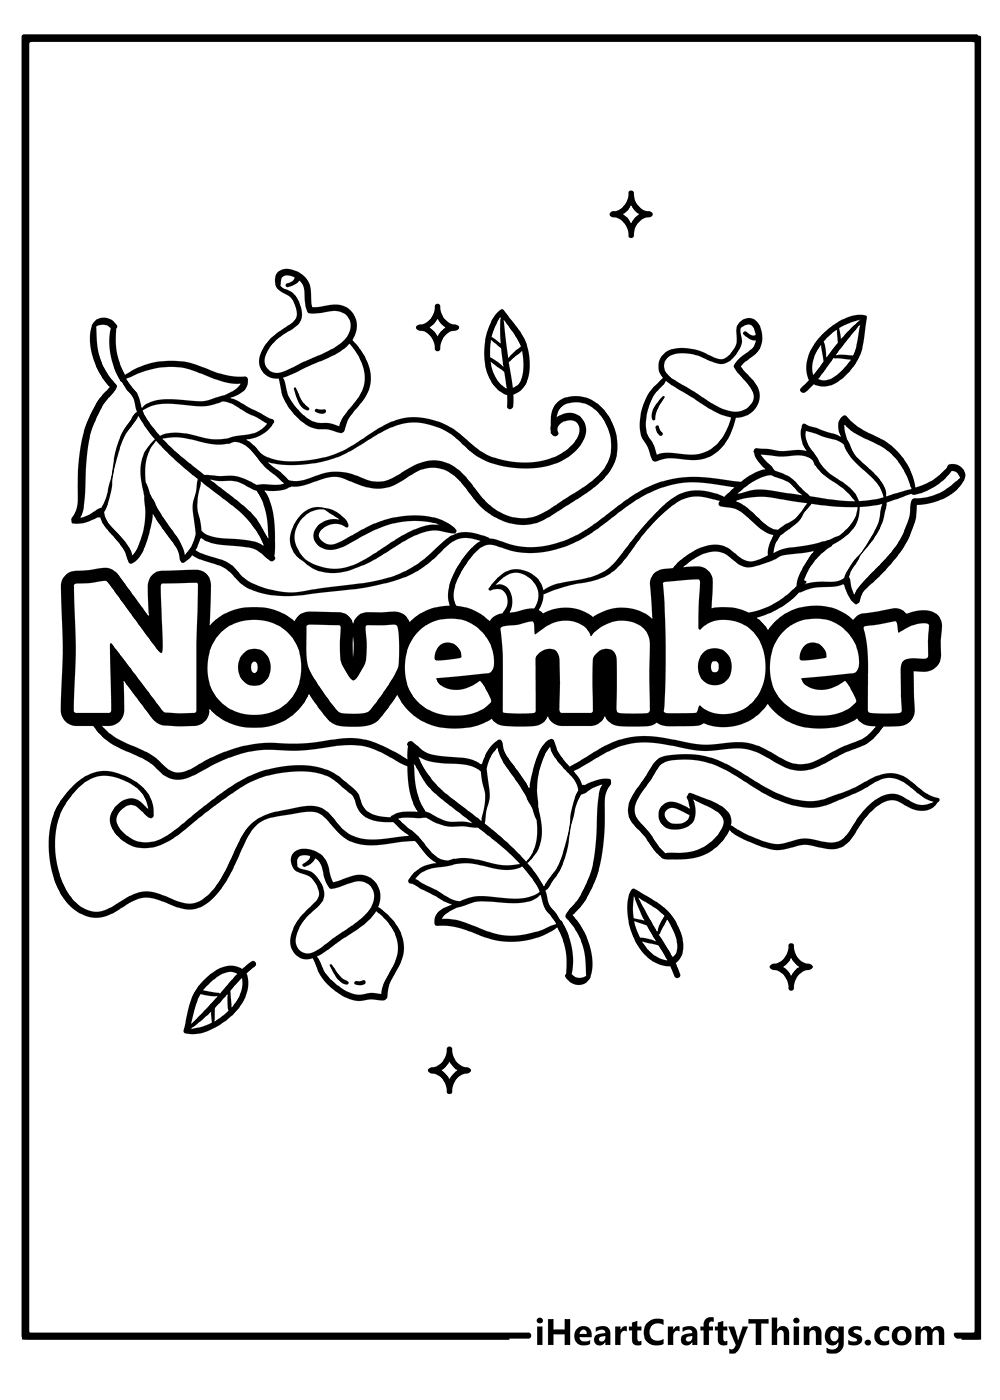 November Coloring Sheet for children free download